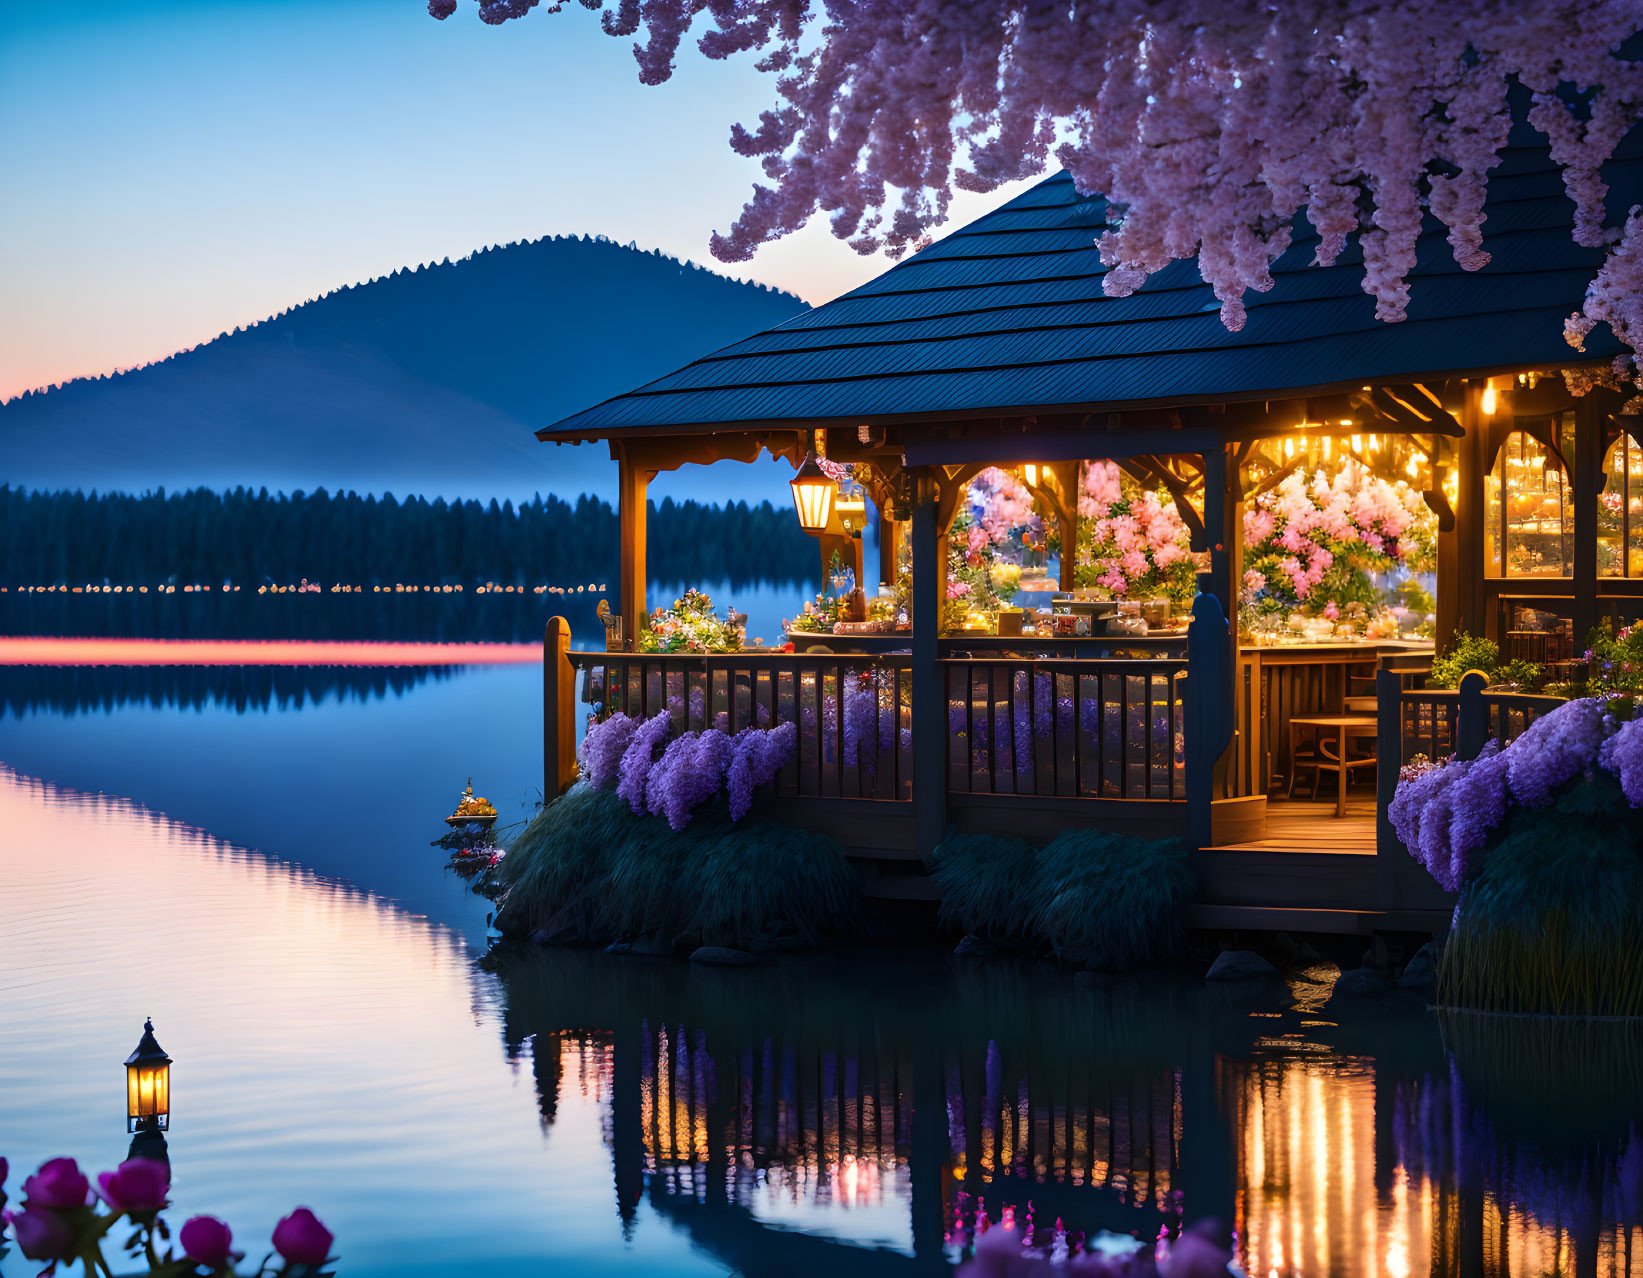 Scenic lakeside gazebo with lanterns, wisteria, and mountain reflection